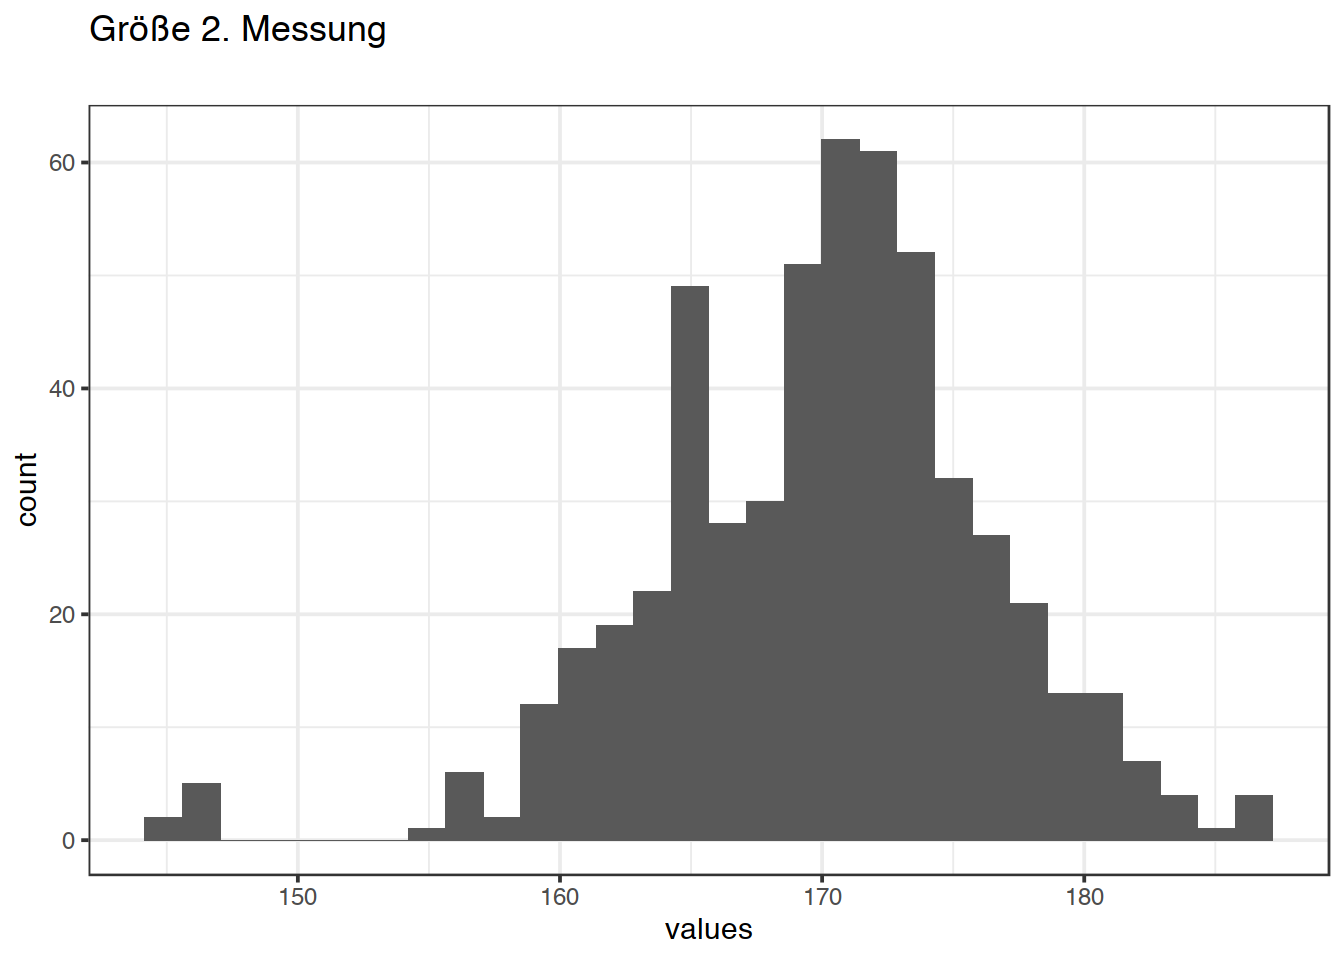 Distribution of values for Größe 2. Messung